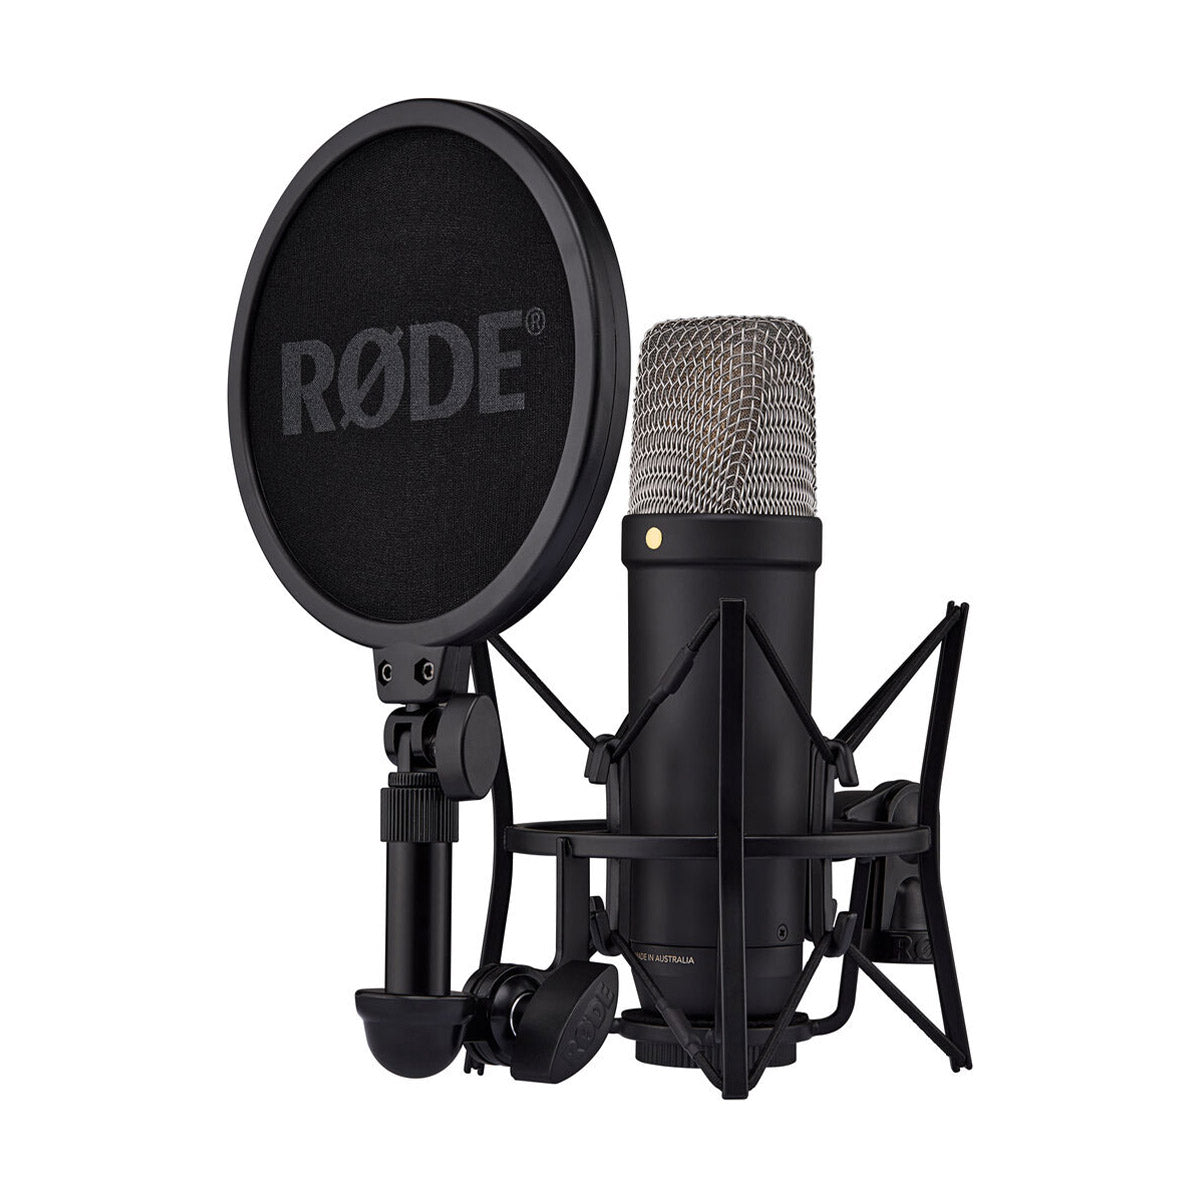 Rode NT-USB Mini Condenser Microphone